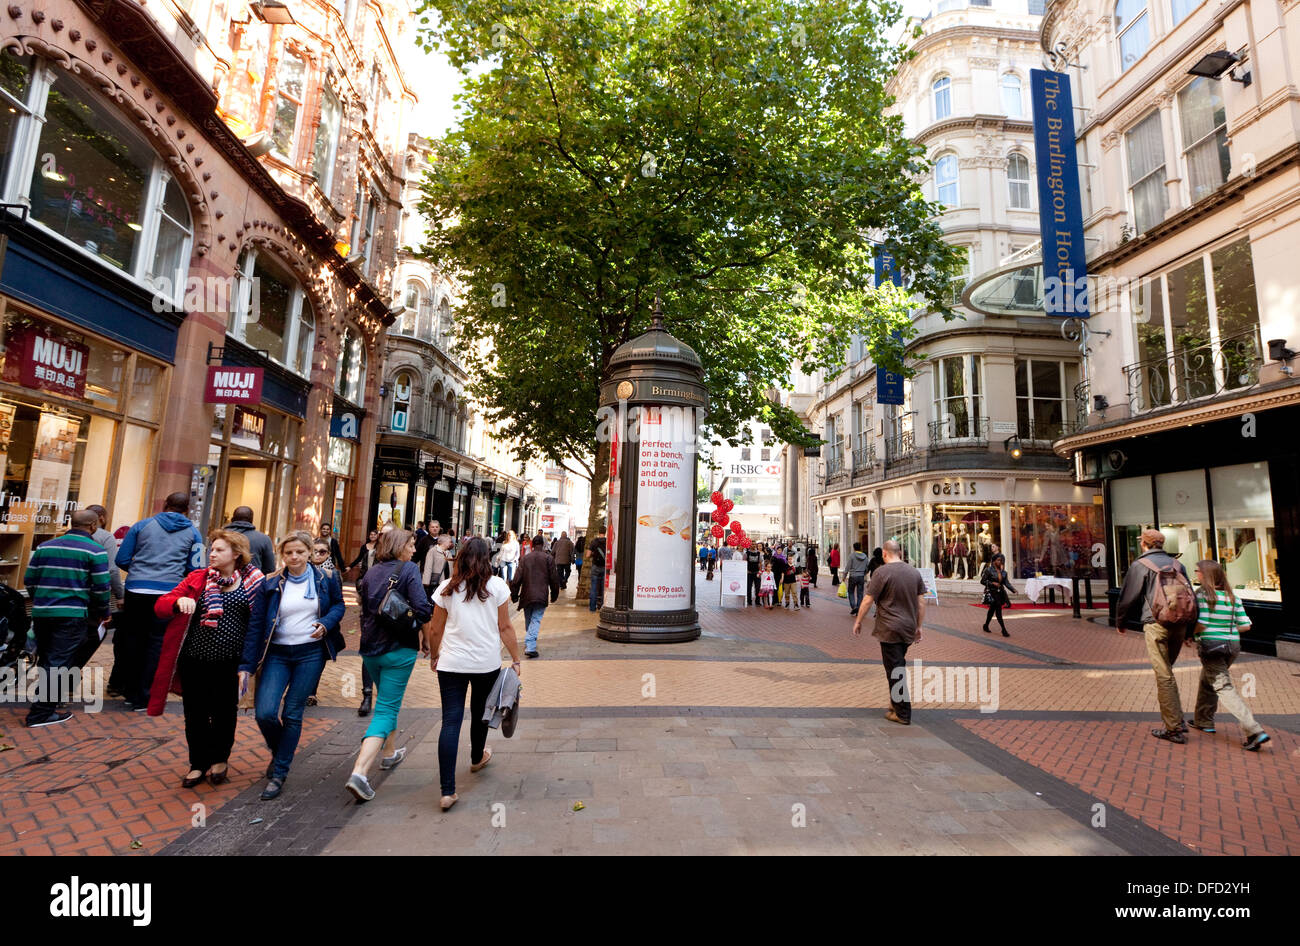 People shopping on a pedestrianised high street - New Street,  Birmingham city centre, UK Stock Photo